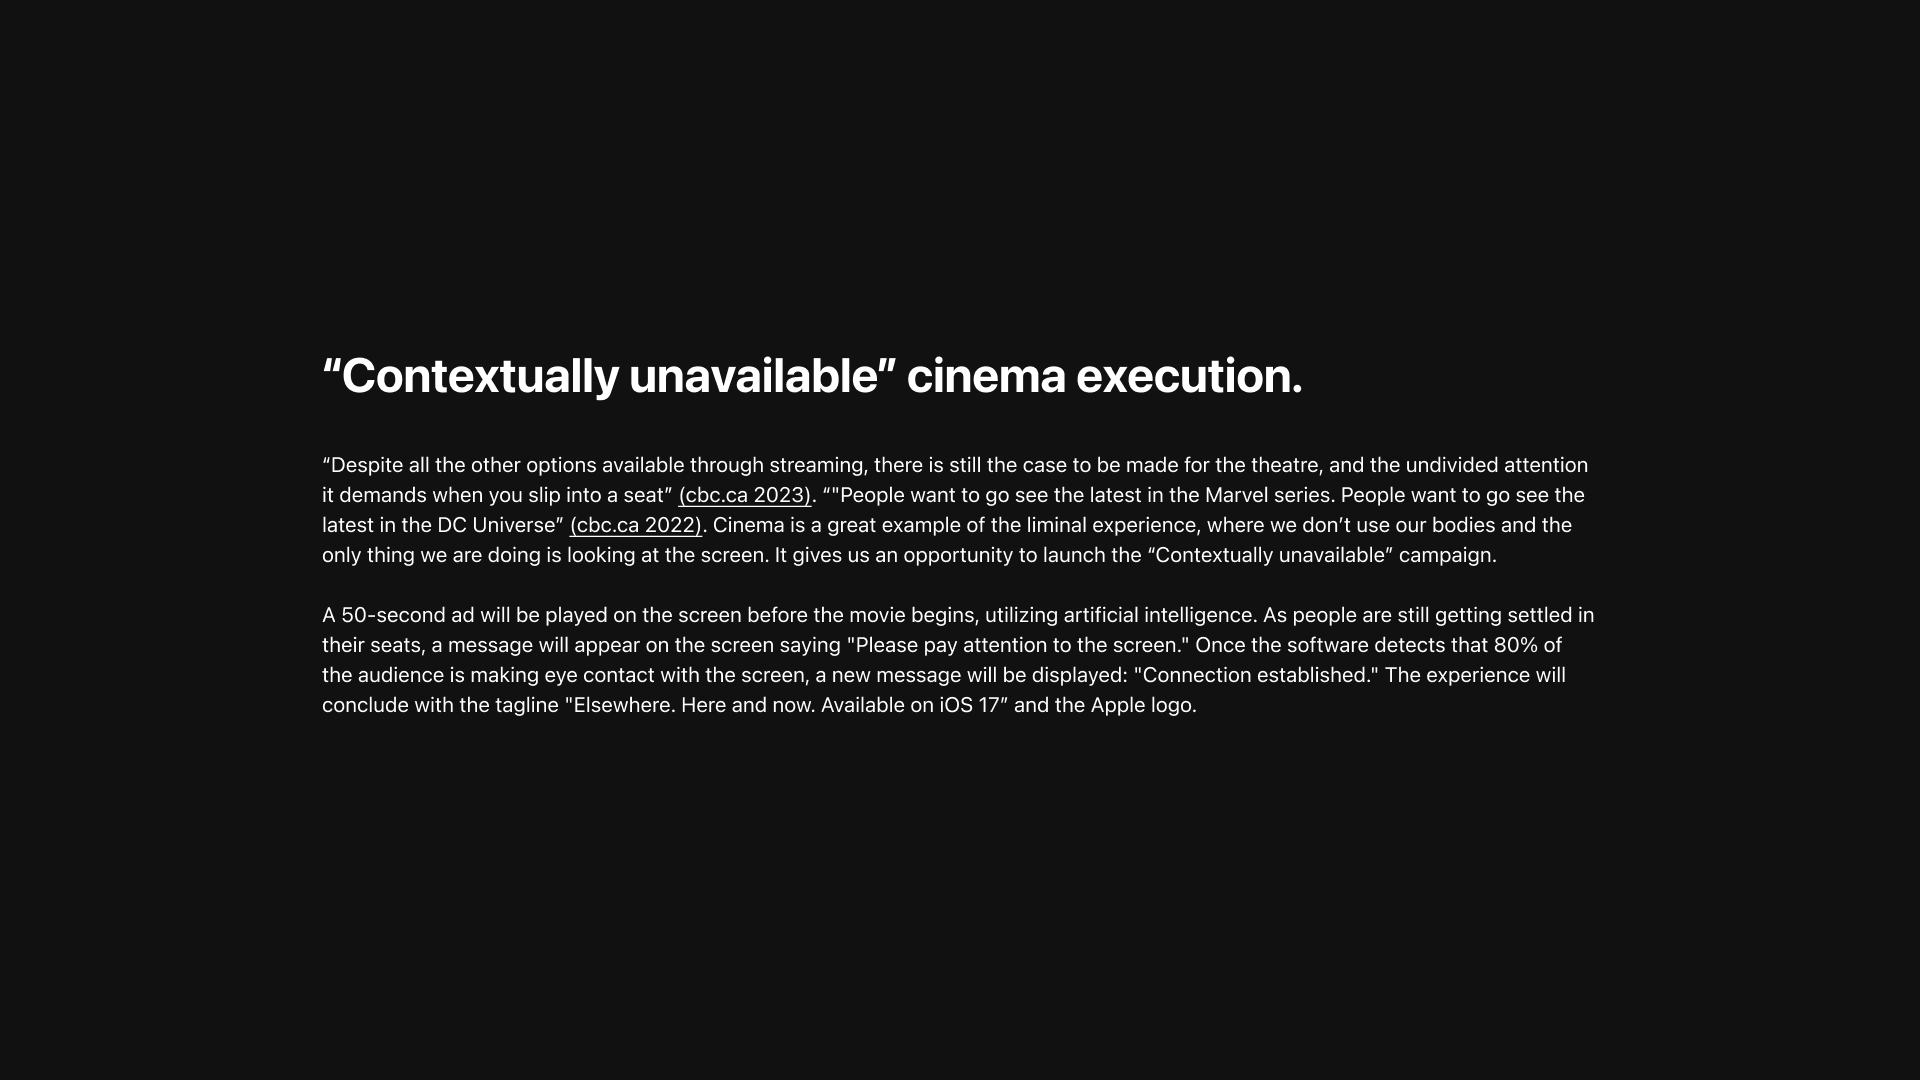 "Contextually unavailable" cinema execution overview.